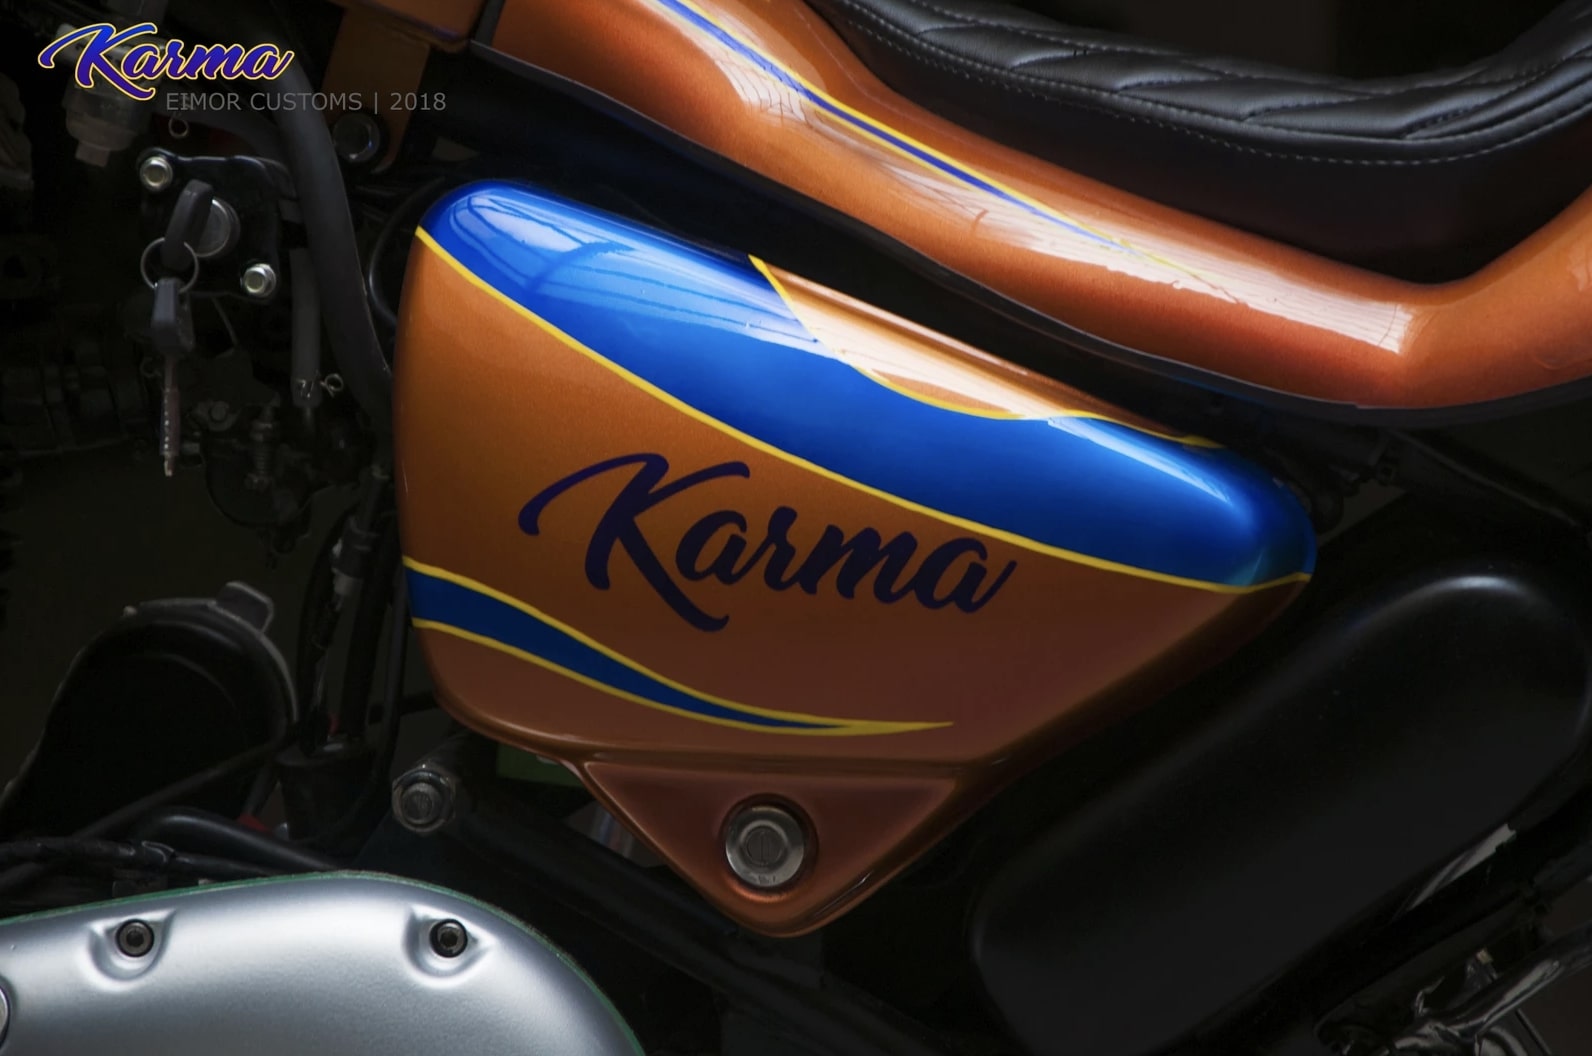 Meet Karma 350 - Based on the Royal Enfield Thunderbird Motorcycle - snap